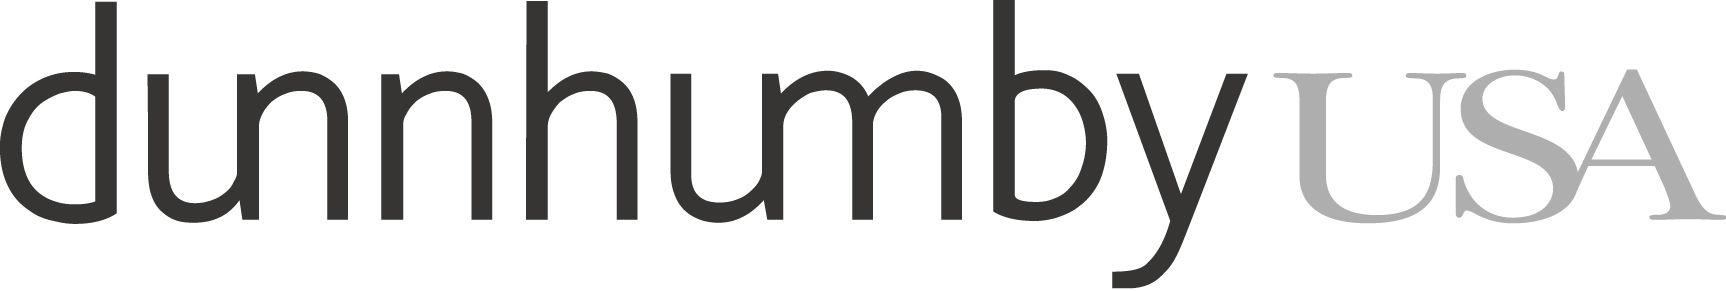 Dunnhumbyusa Logo - Loyalty360 Members and Sponsors